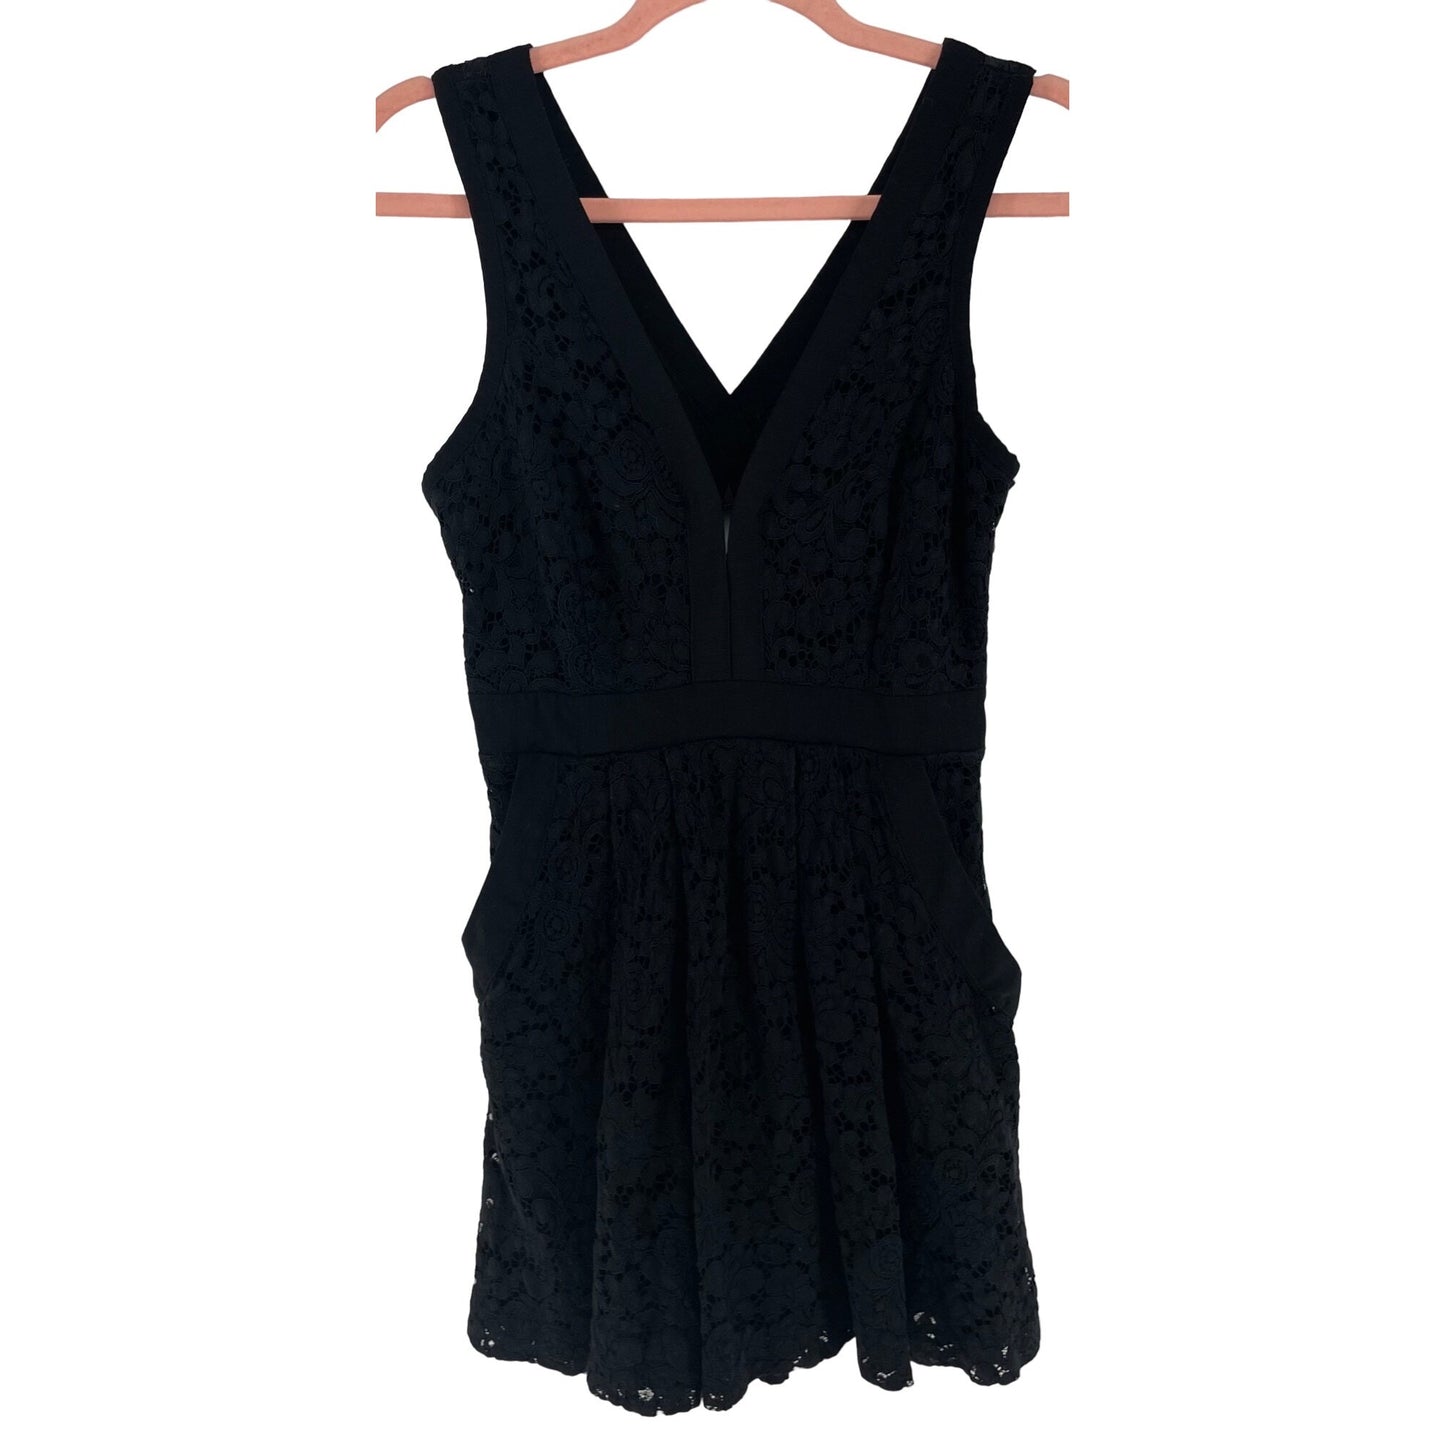 Free People Women's Size XS Sleeveless Black Floral Lace Mini Dress